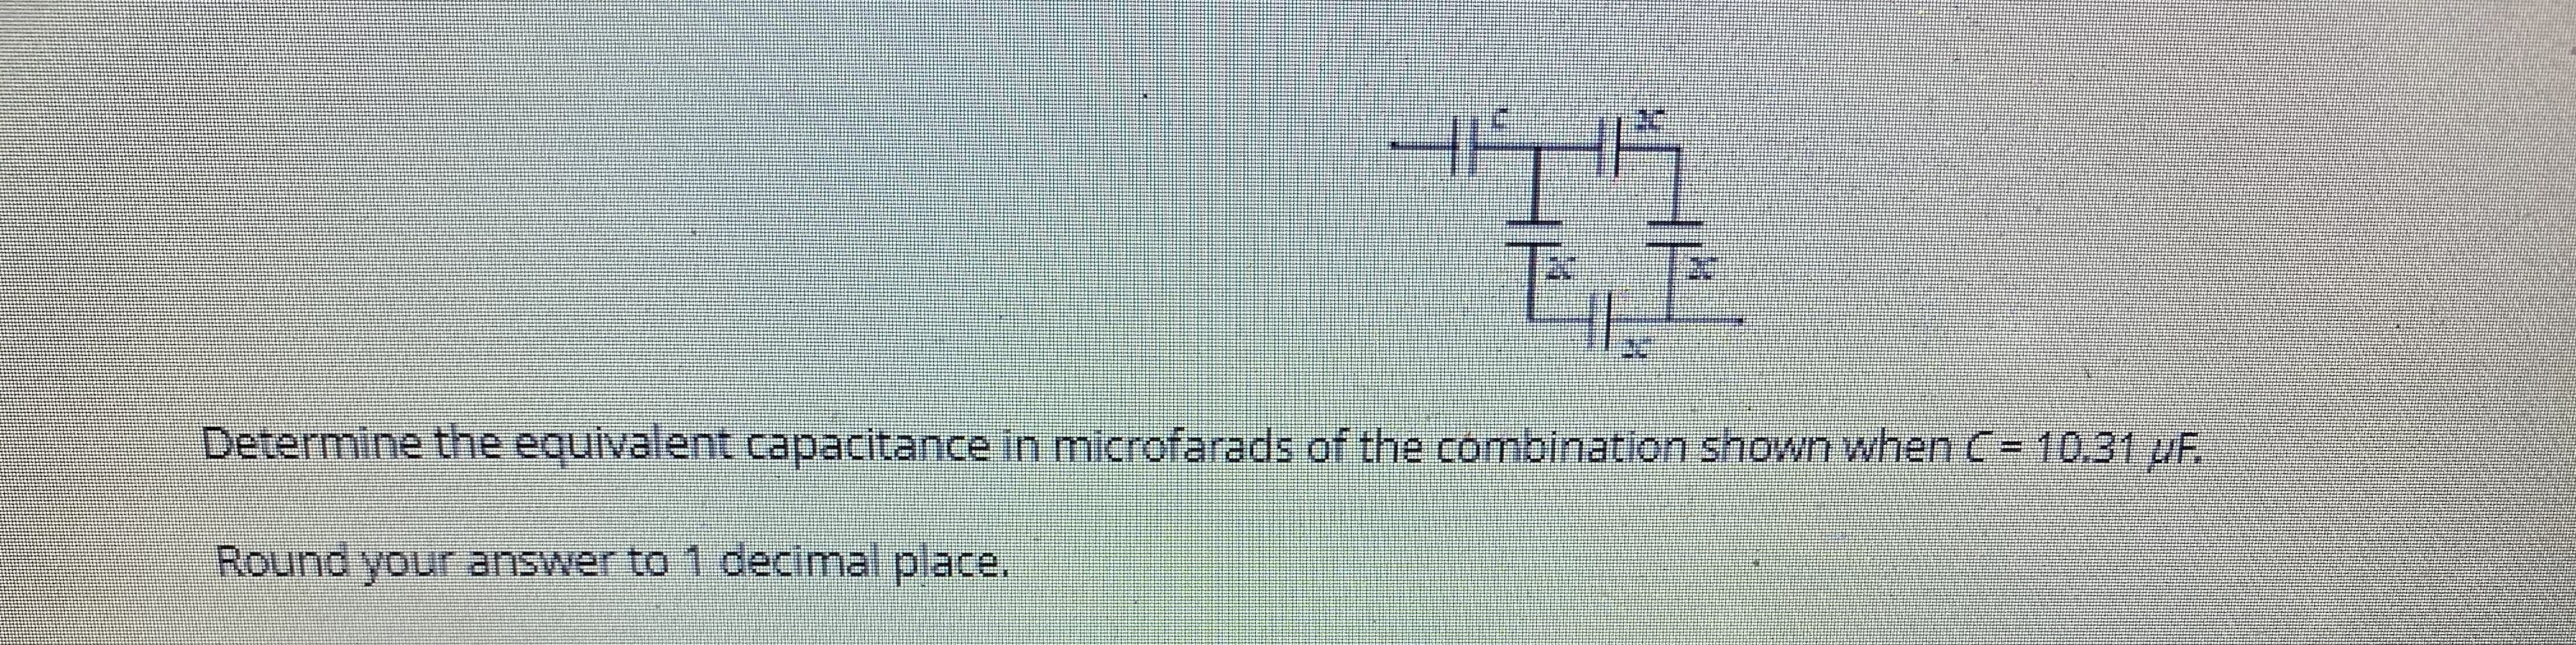 Determine the equivalent capacitance in microfarads of the combination shown when C= 10.3I µF.
